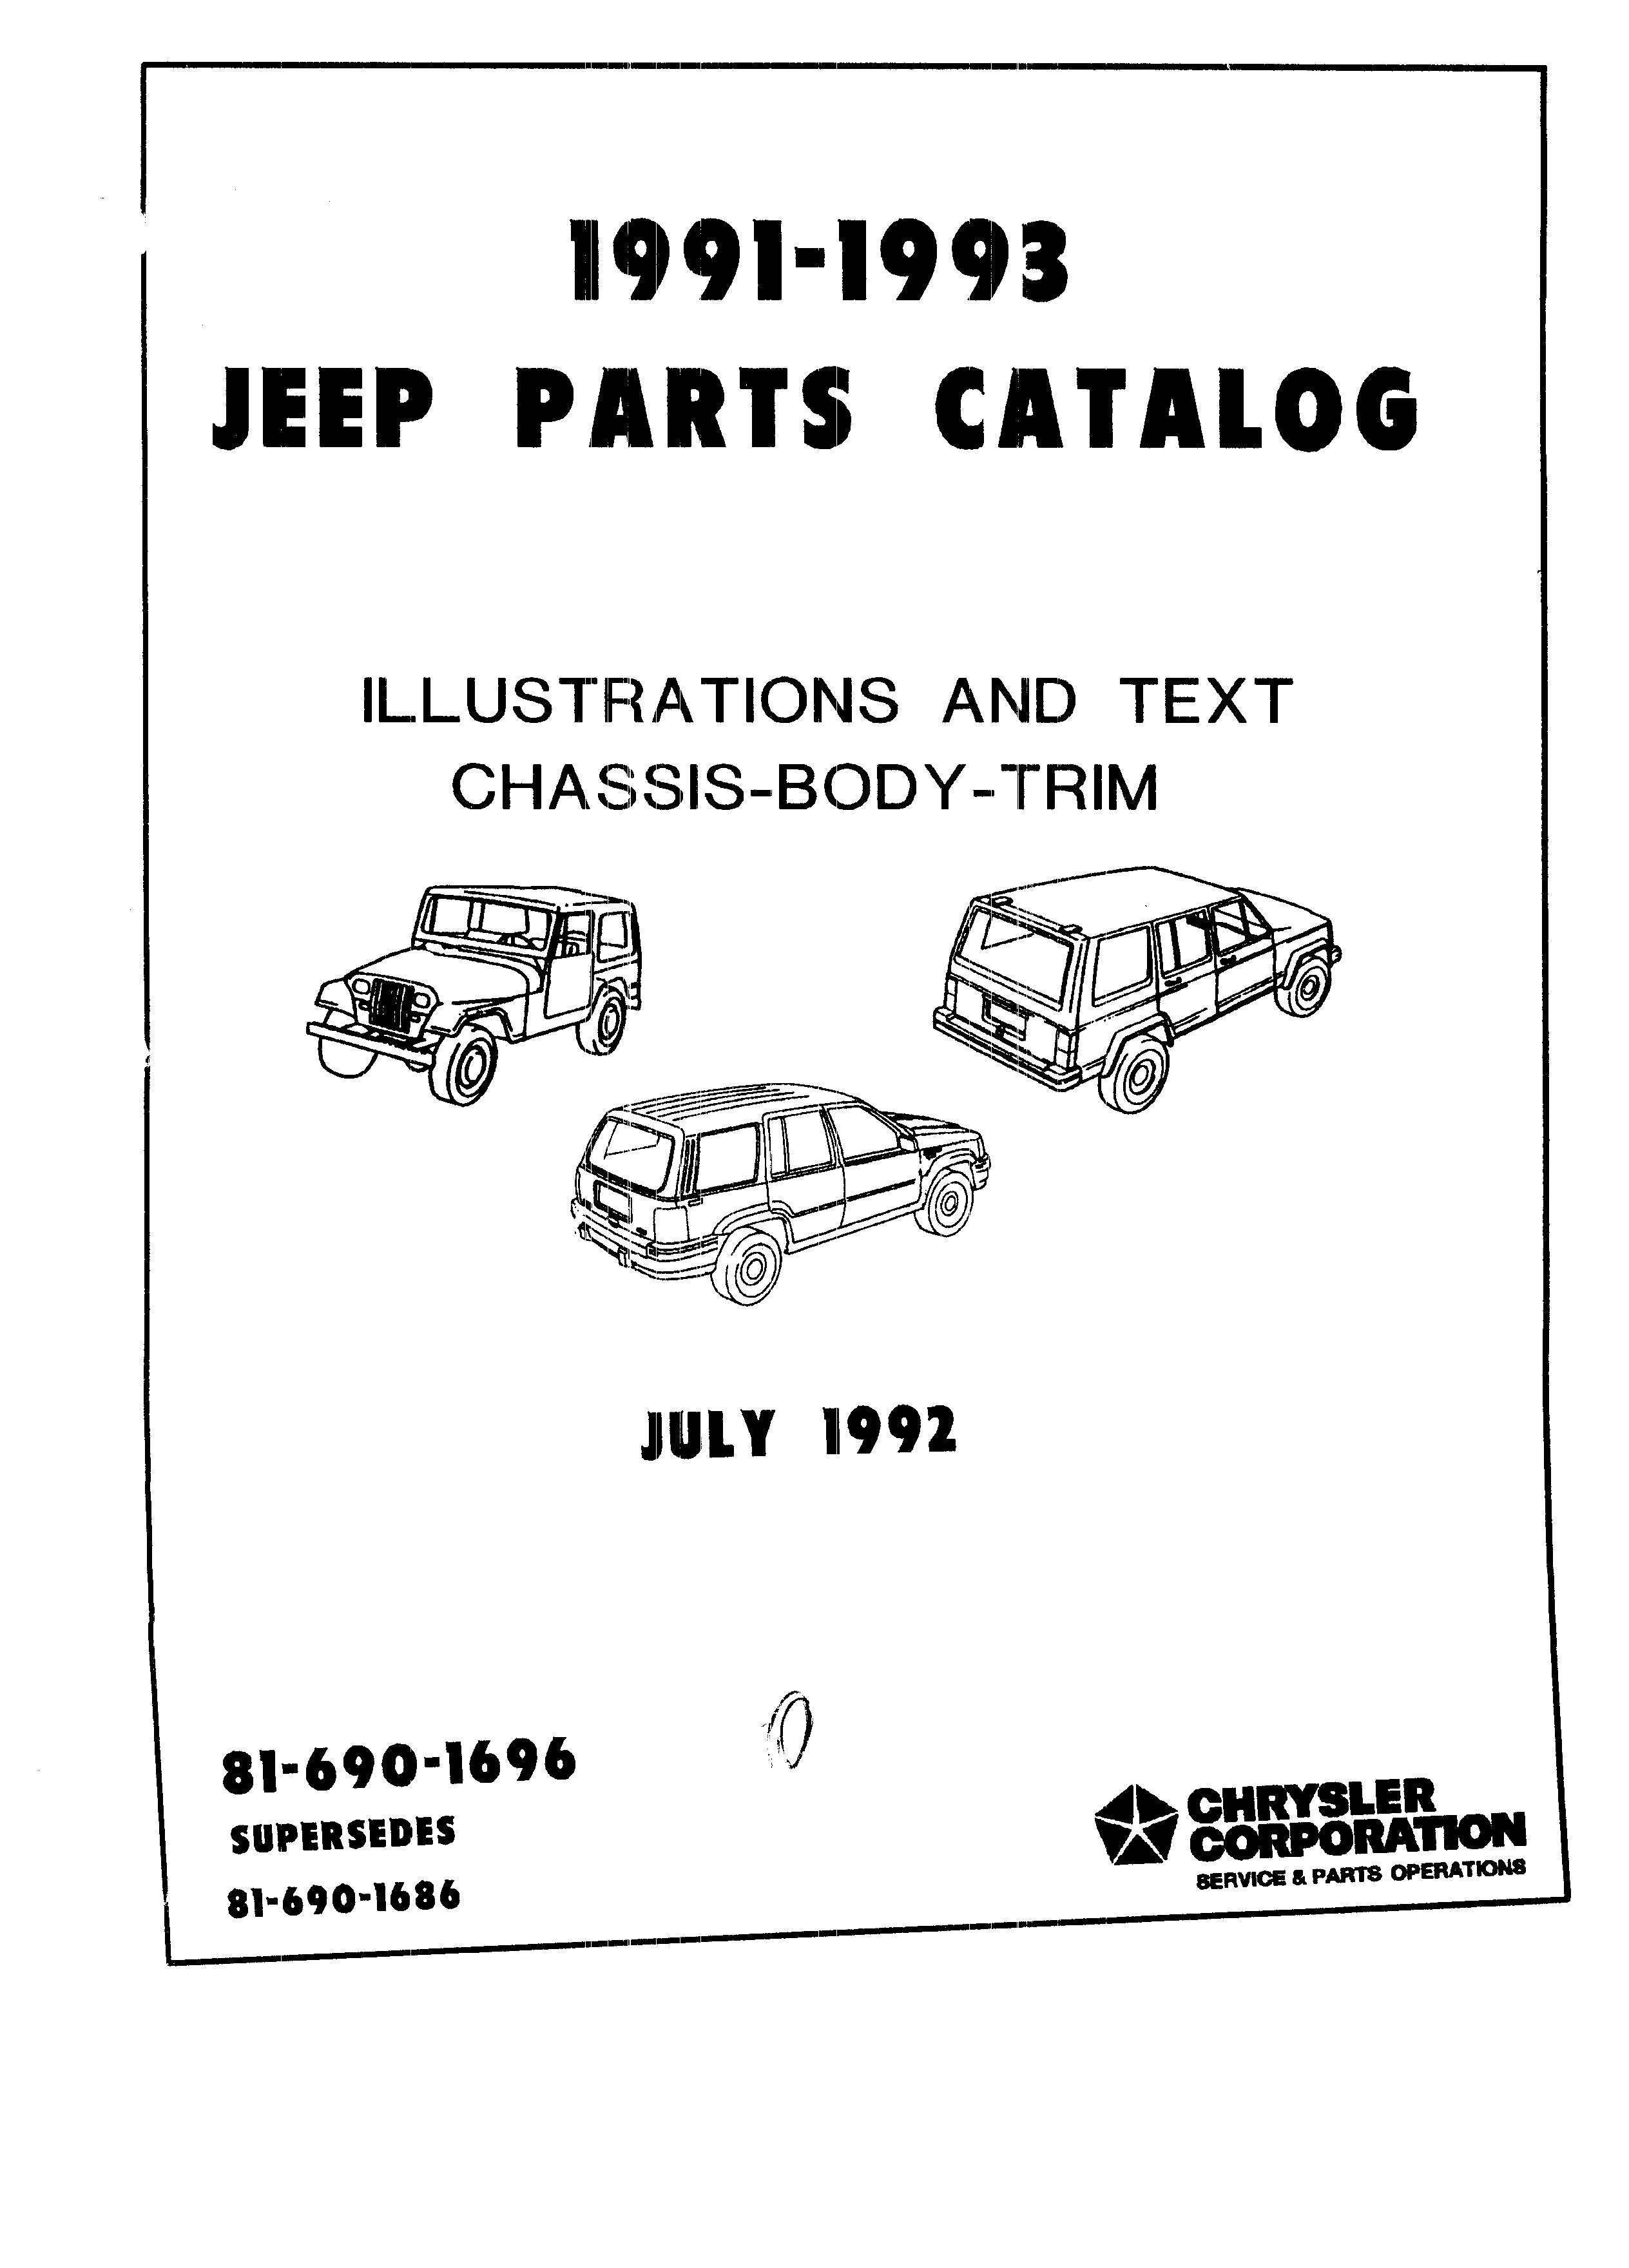 Jeep Parts Catalog July 1992